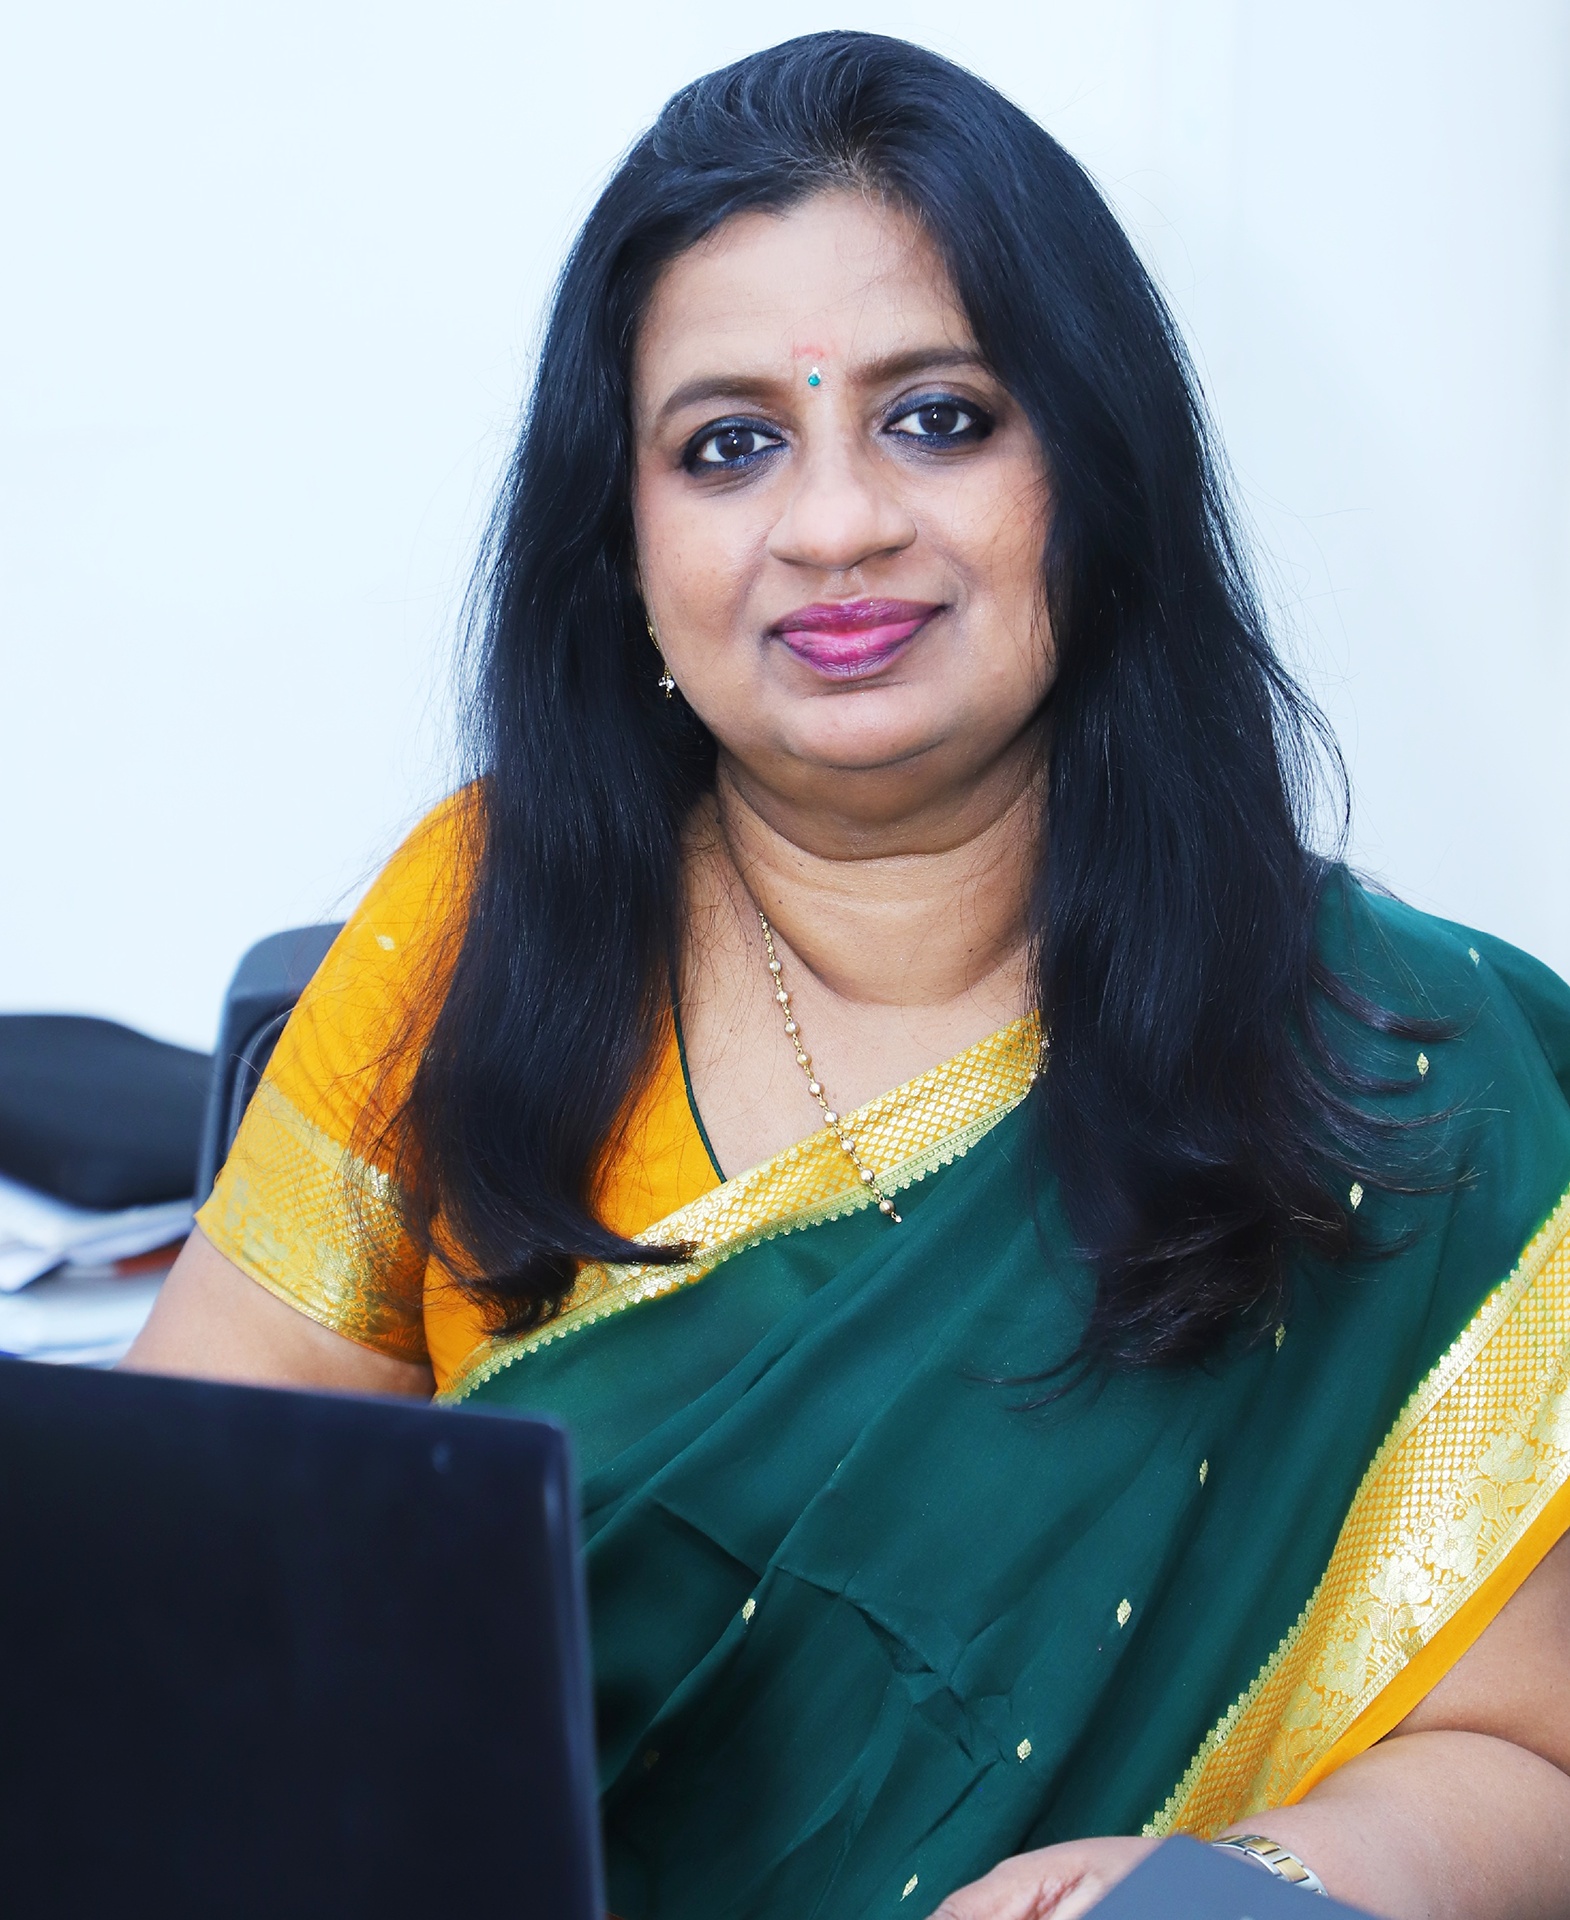 Dr. Preetha G. S., Professor & Dean (Research) at IIHMR Delhi